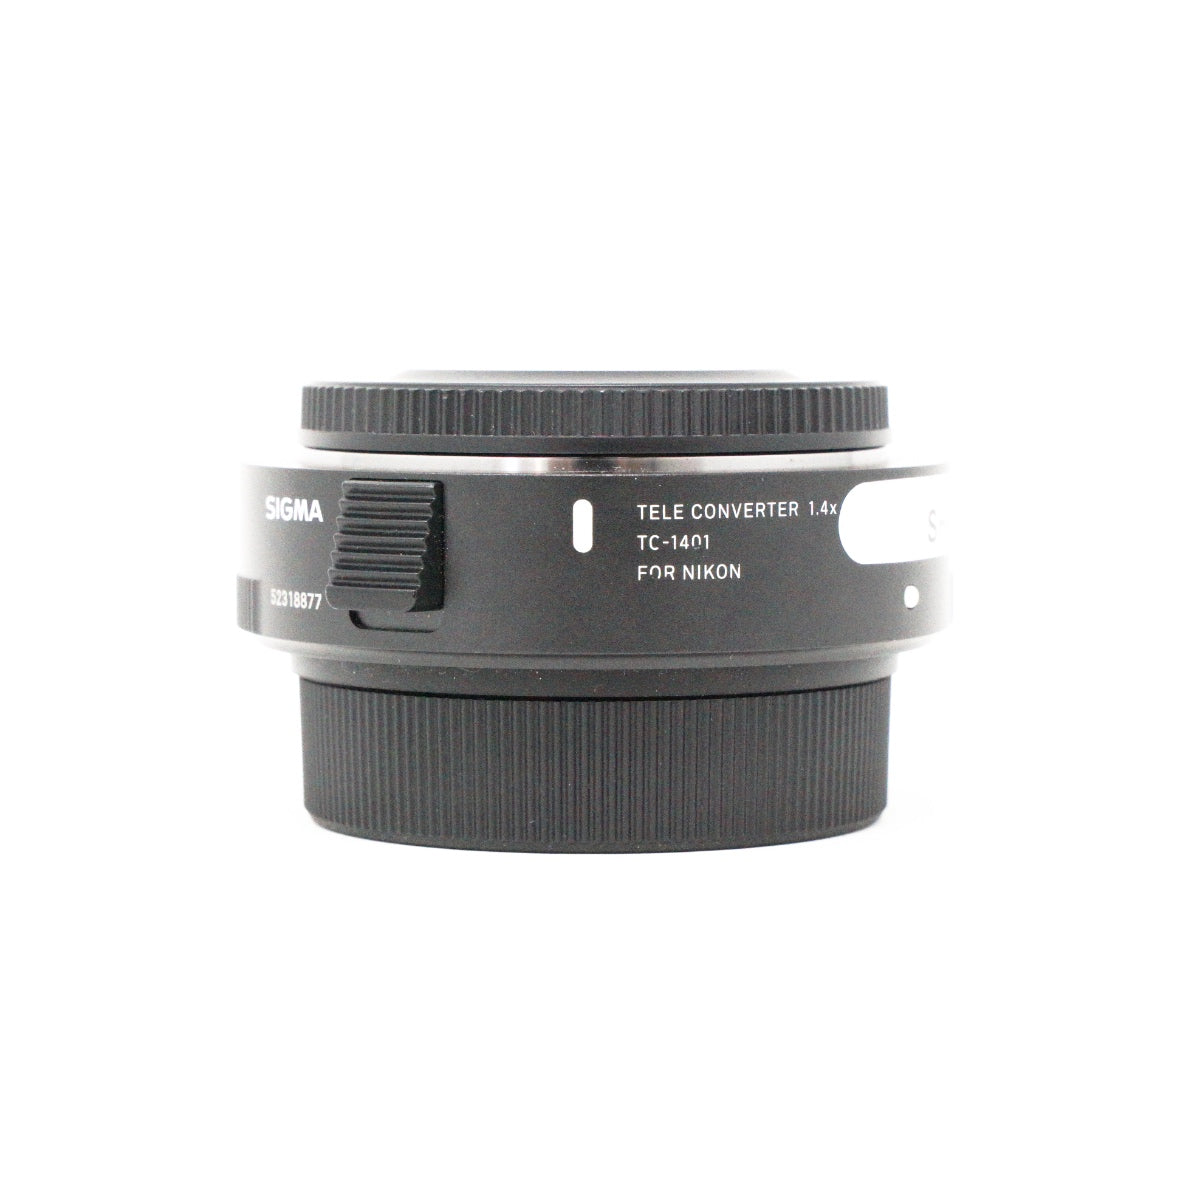 Used Sigma TC-1401 Teleconverter 1.4X for Nikon